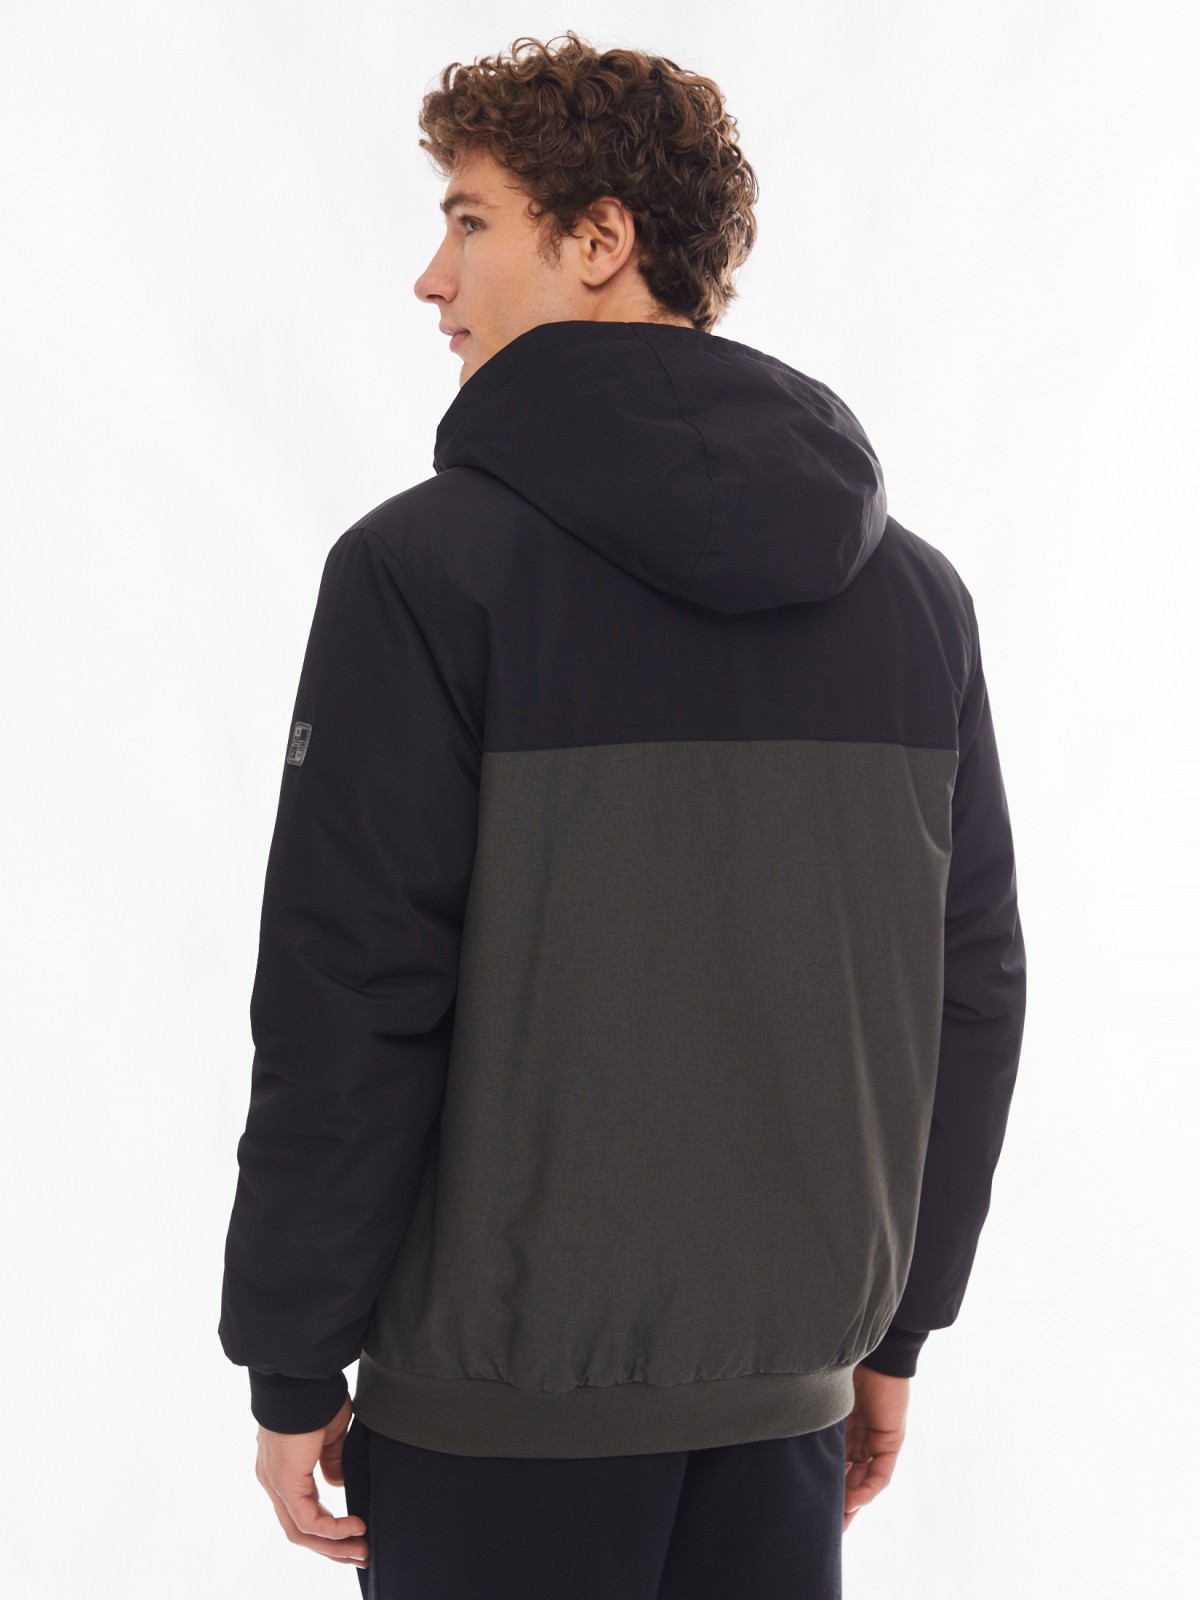 Утеплённая куртка-бомбер на синтепоне с капюшоном zolla 01412510L034, цвет хаки, размер M - фото 6